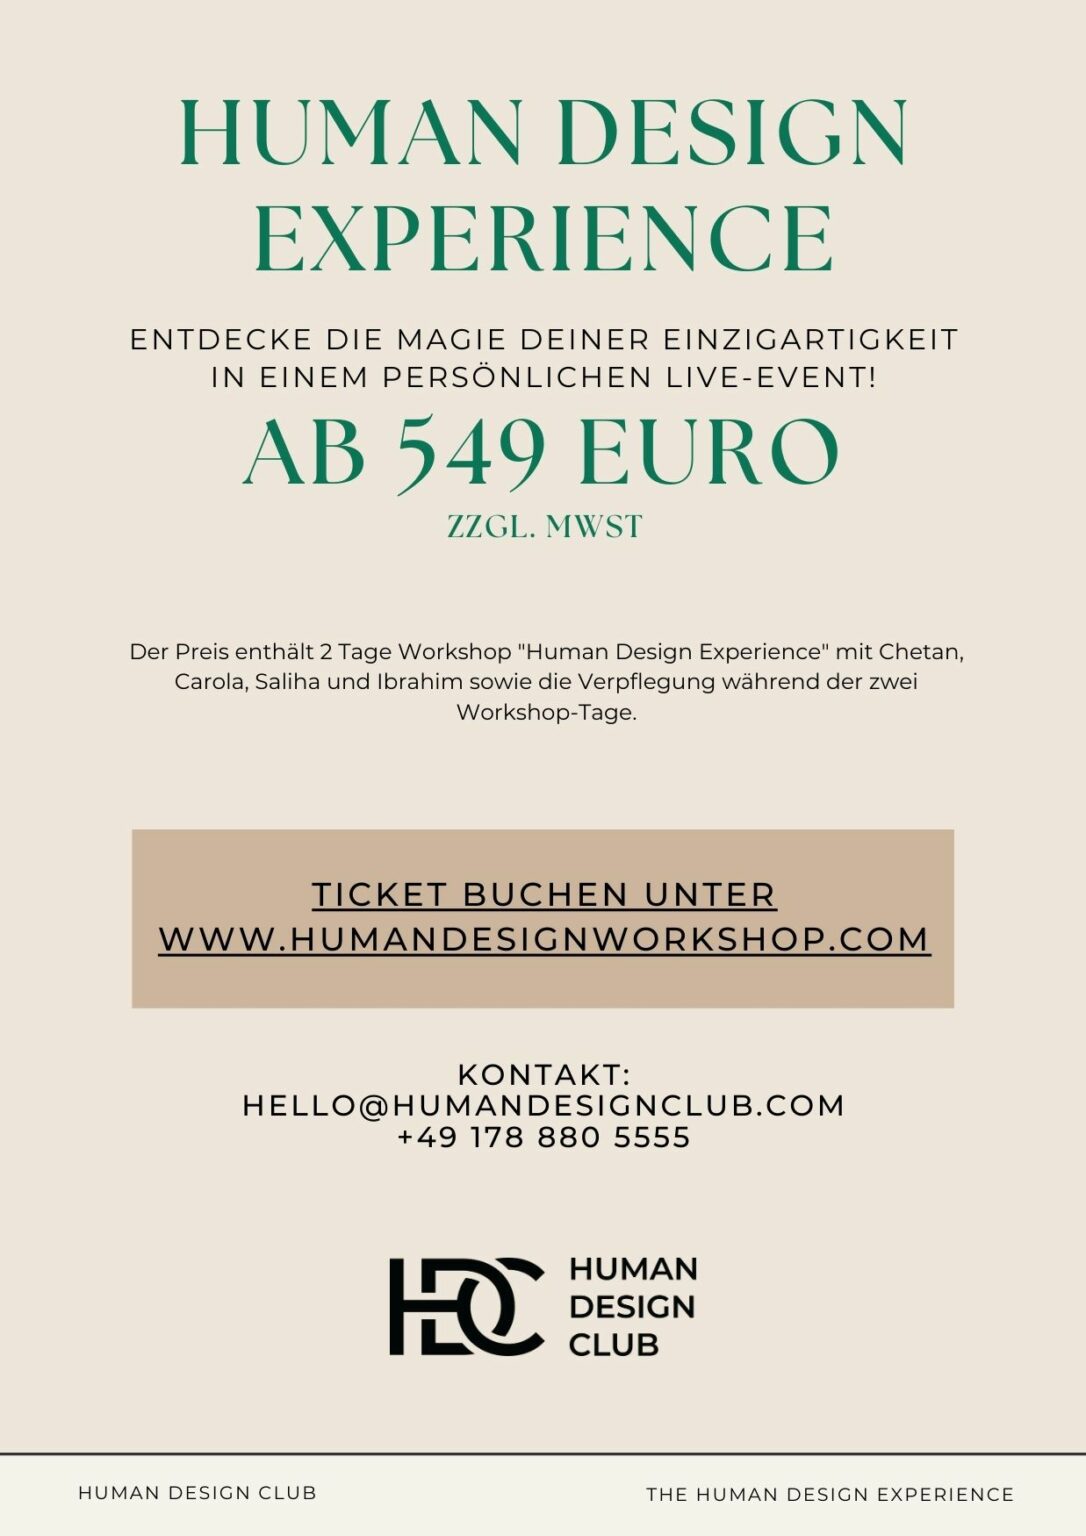 Chetan Parkyn Event Berlin - Human Design Experience 13